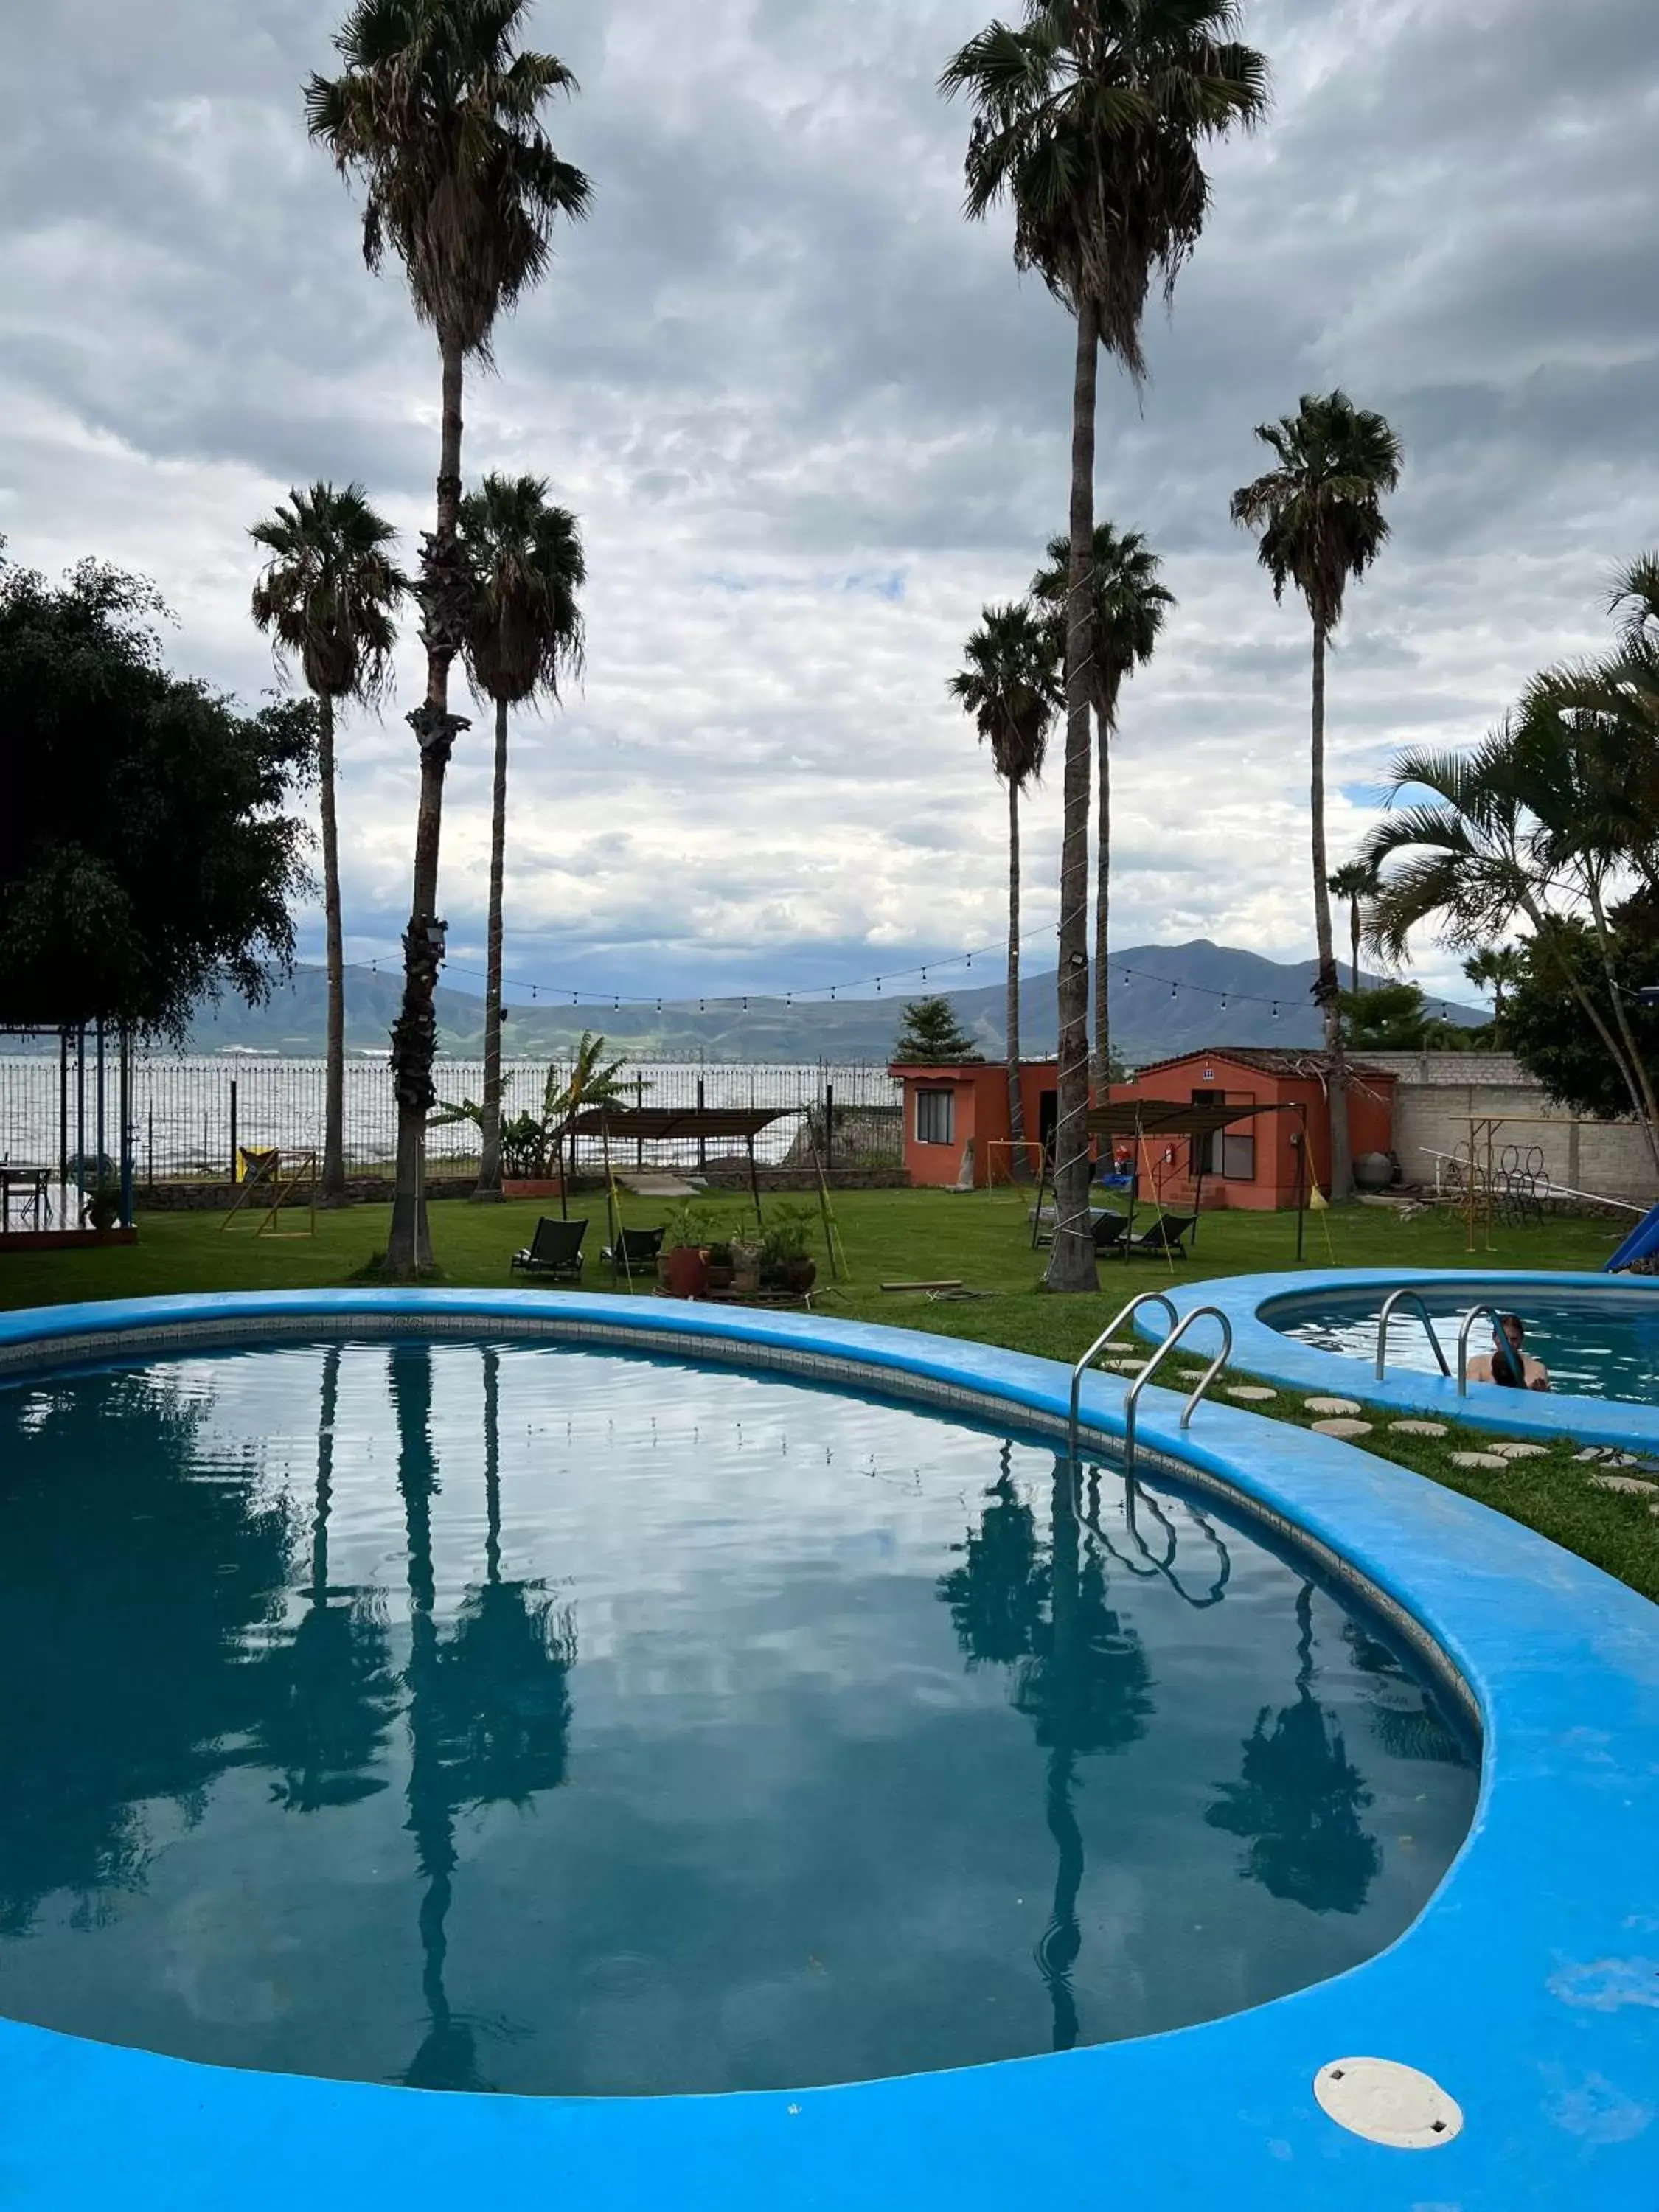 Swimming Pool in Hotel Villas Ajijic, Ajijic Chapala Jalisco